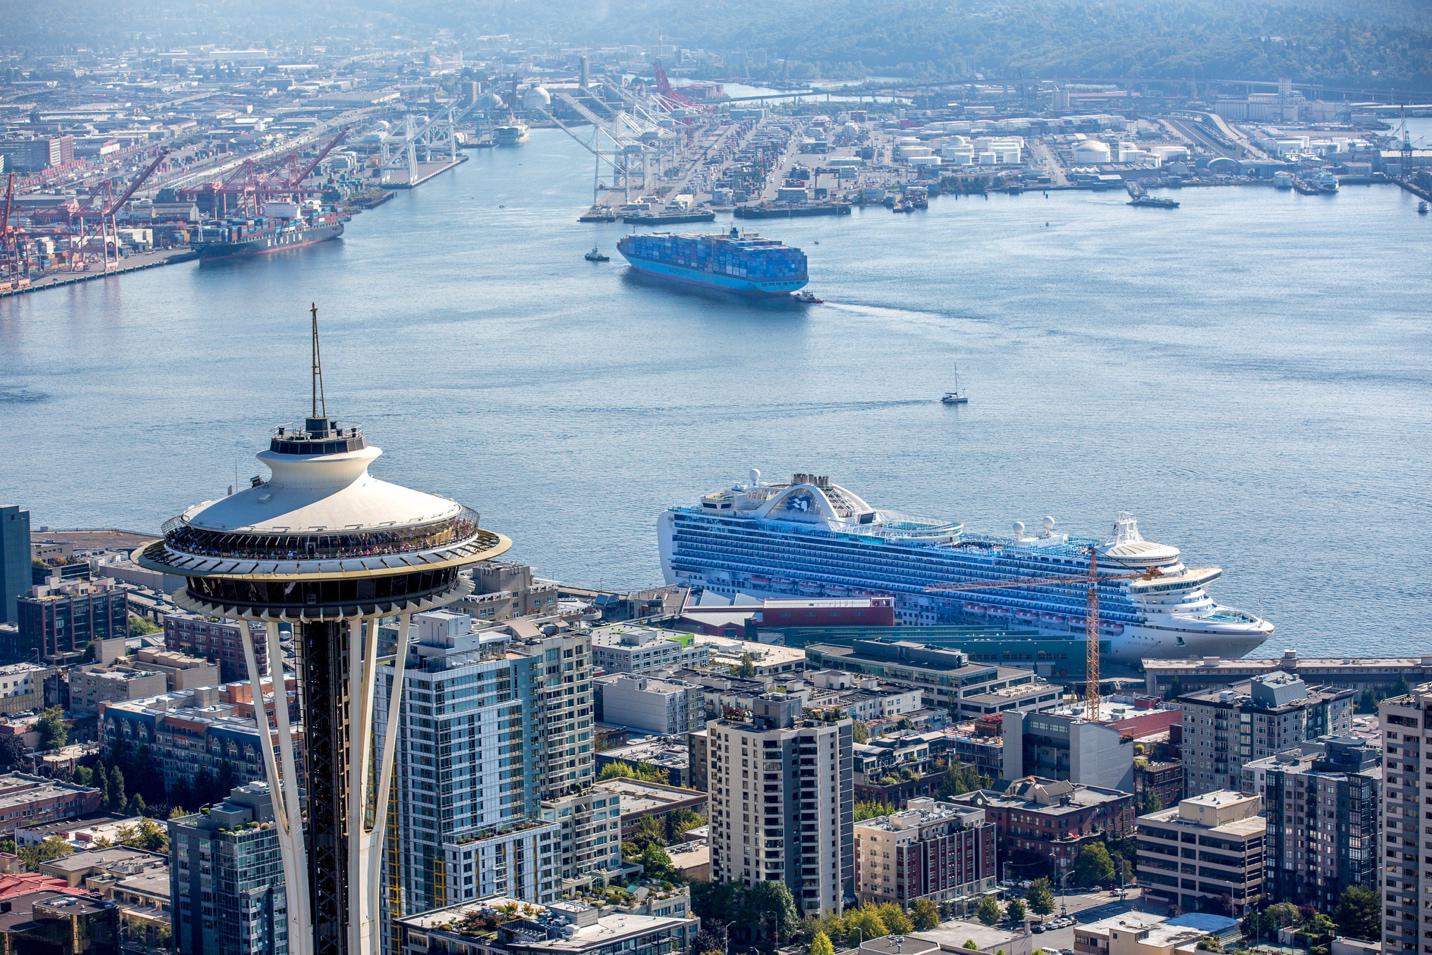 Seattle has biggest cruise season ever